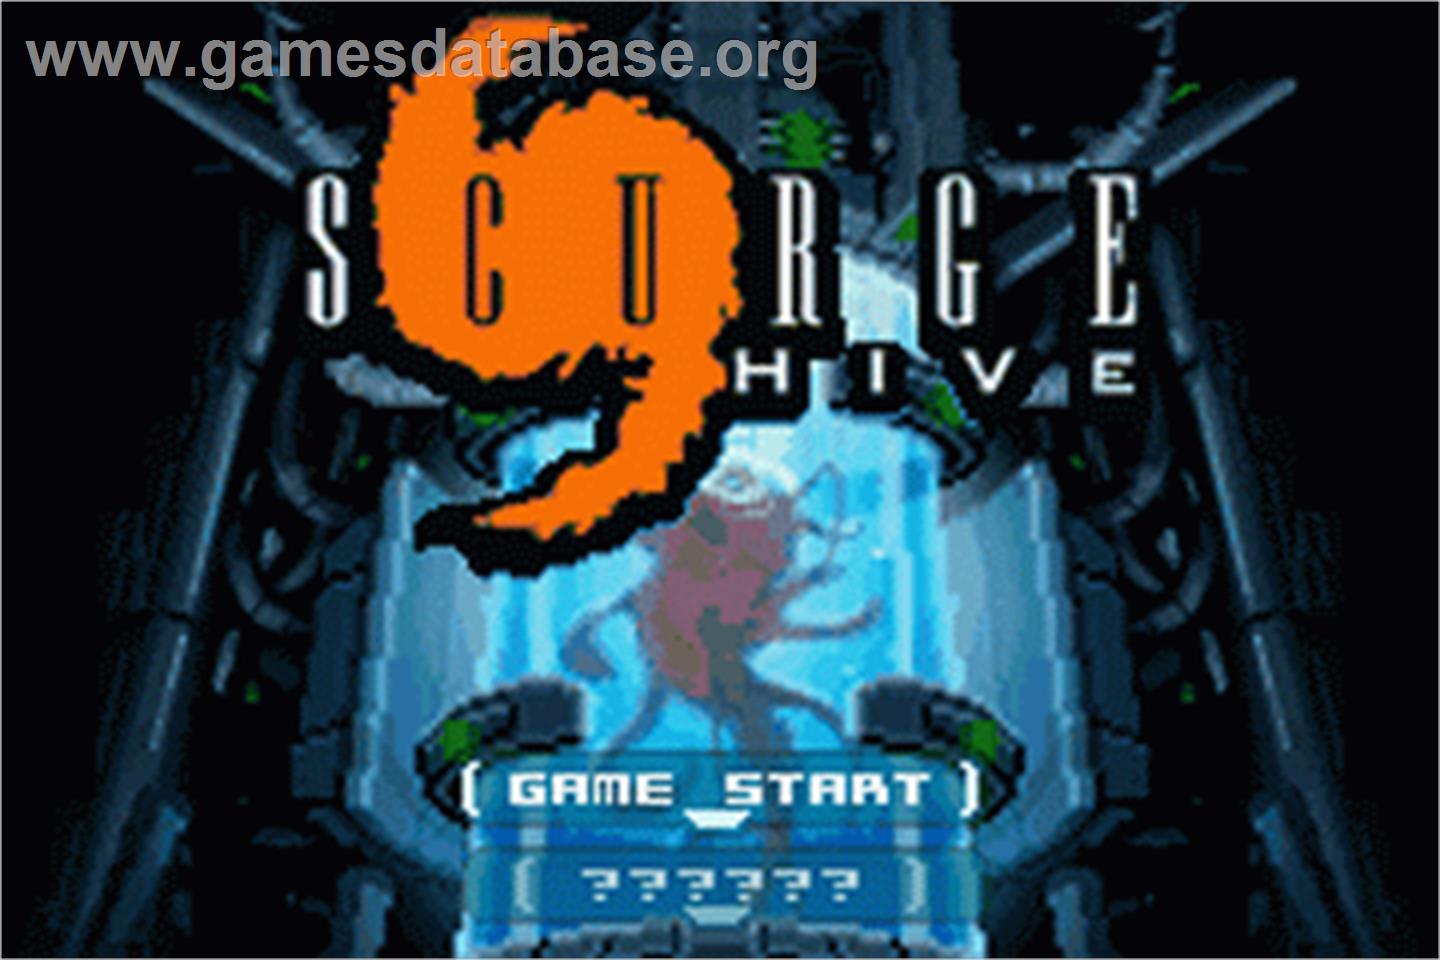 Scurge: Hive - Nintendo Game Boy Advance - Artwork - Title Screen